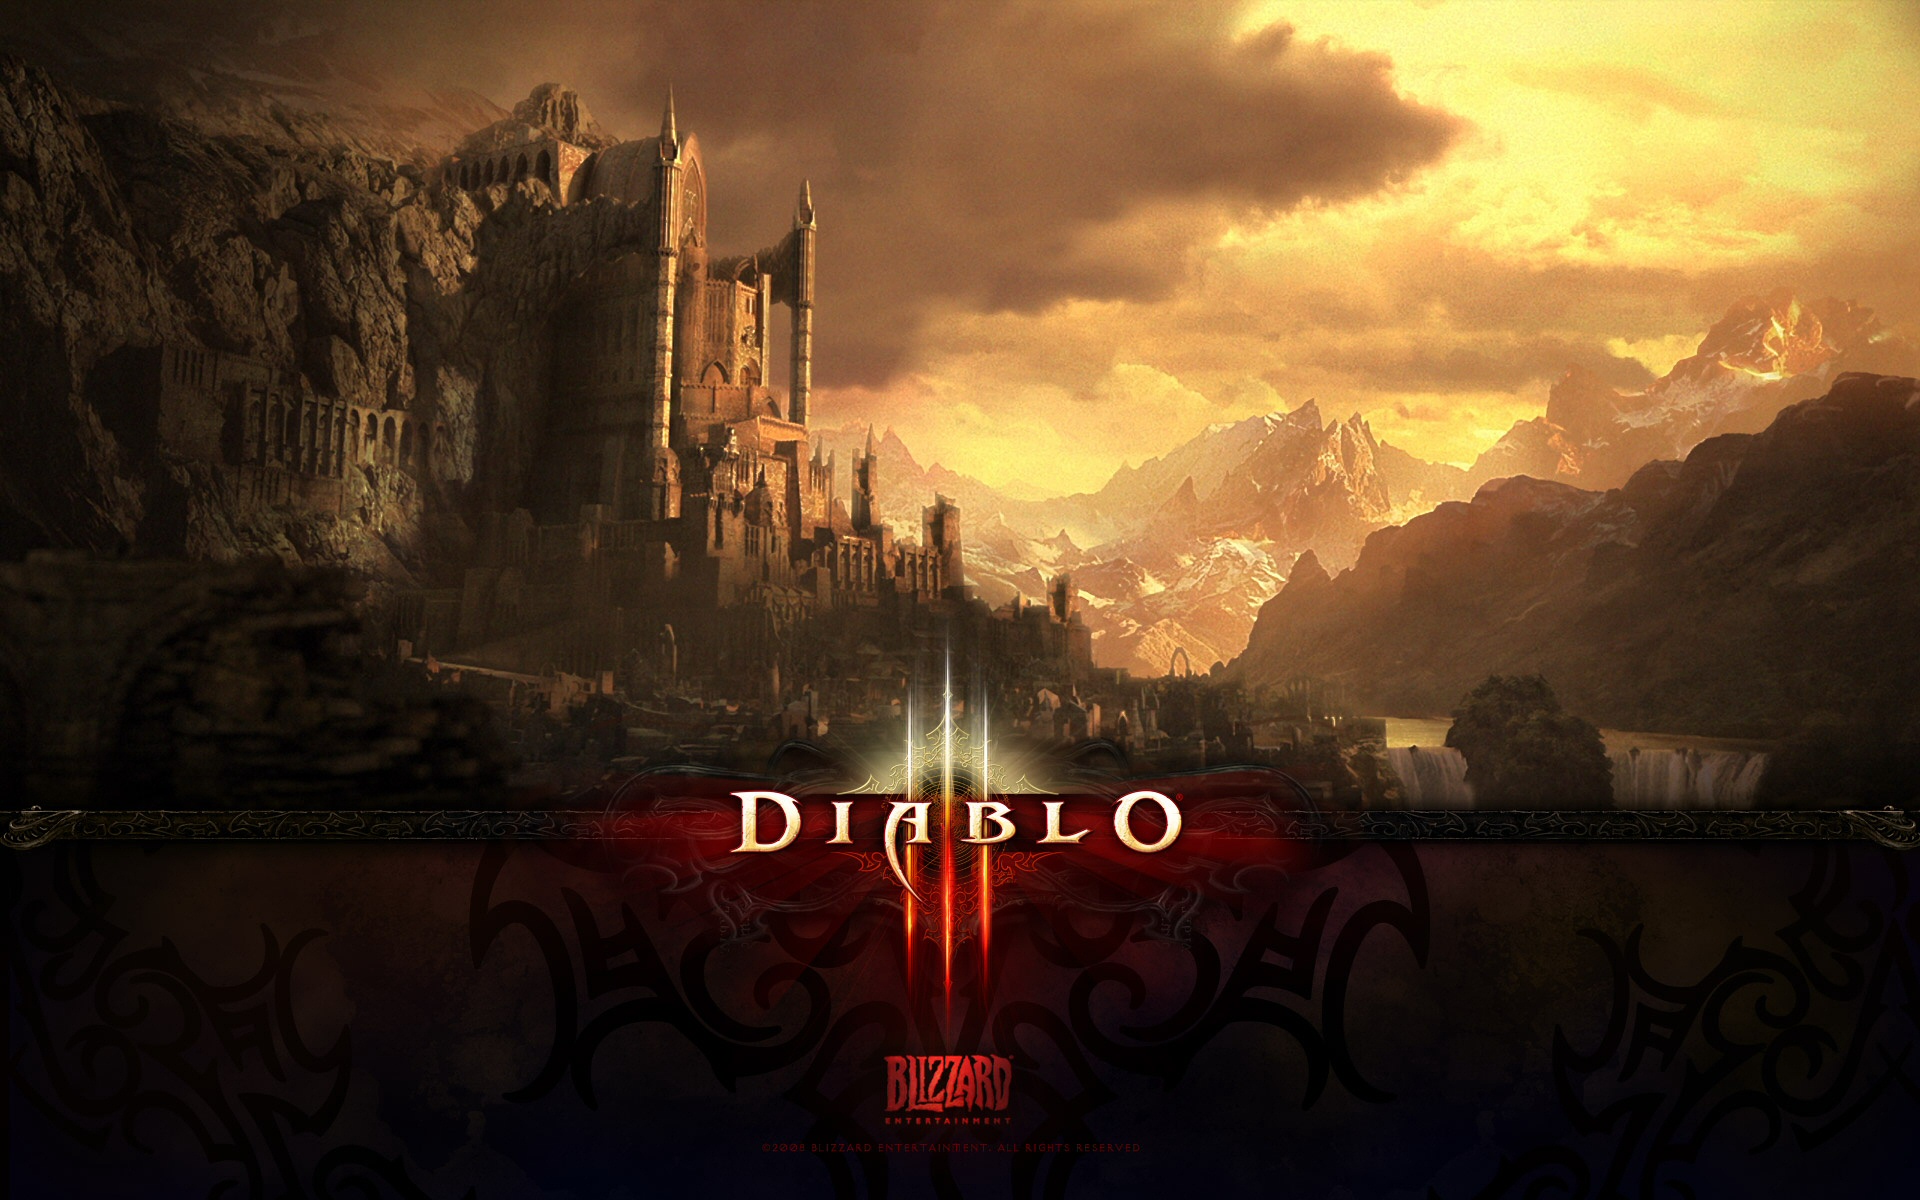 Diablo 3 Galaxy Wallpaper 8K 7680x4320 by ThomasFentyTurner on DeviantArt